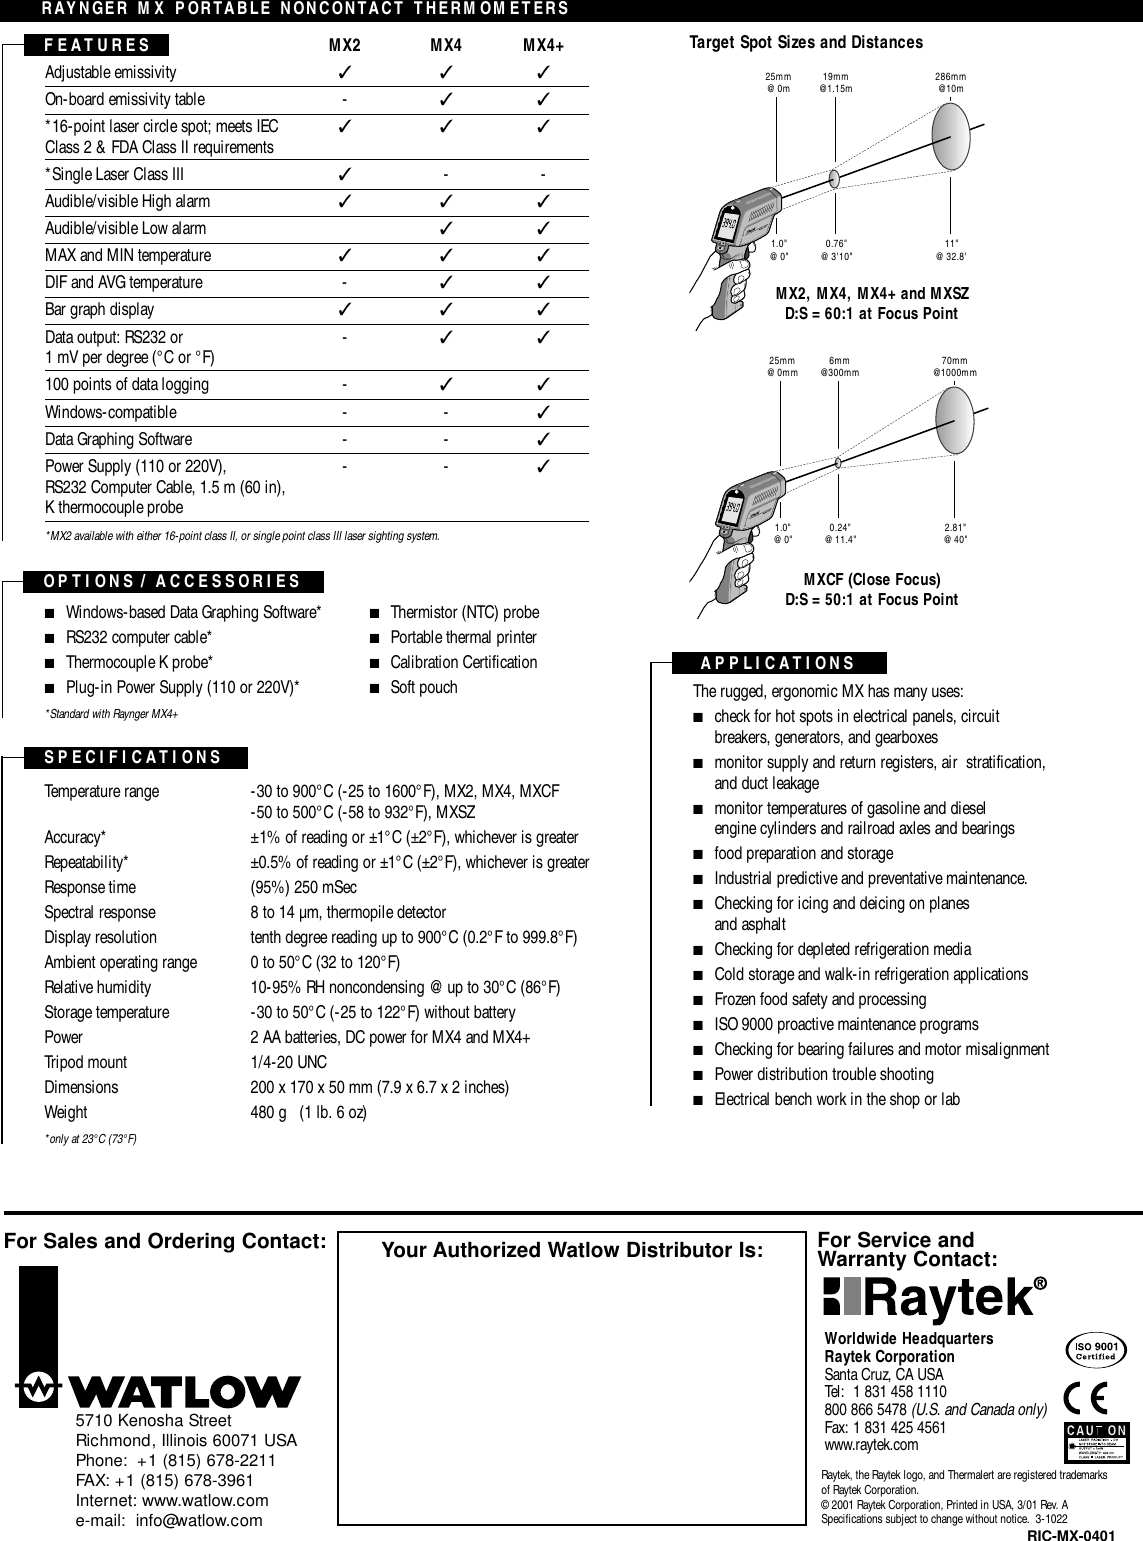 Raytek Raynger Mx Series Users Manual